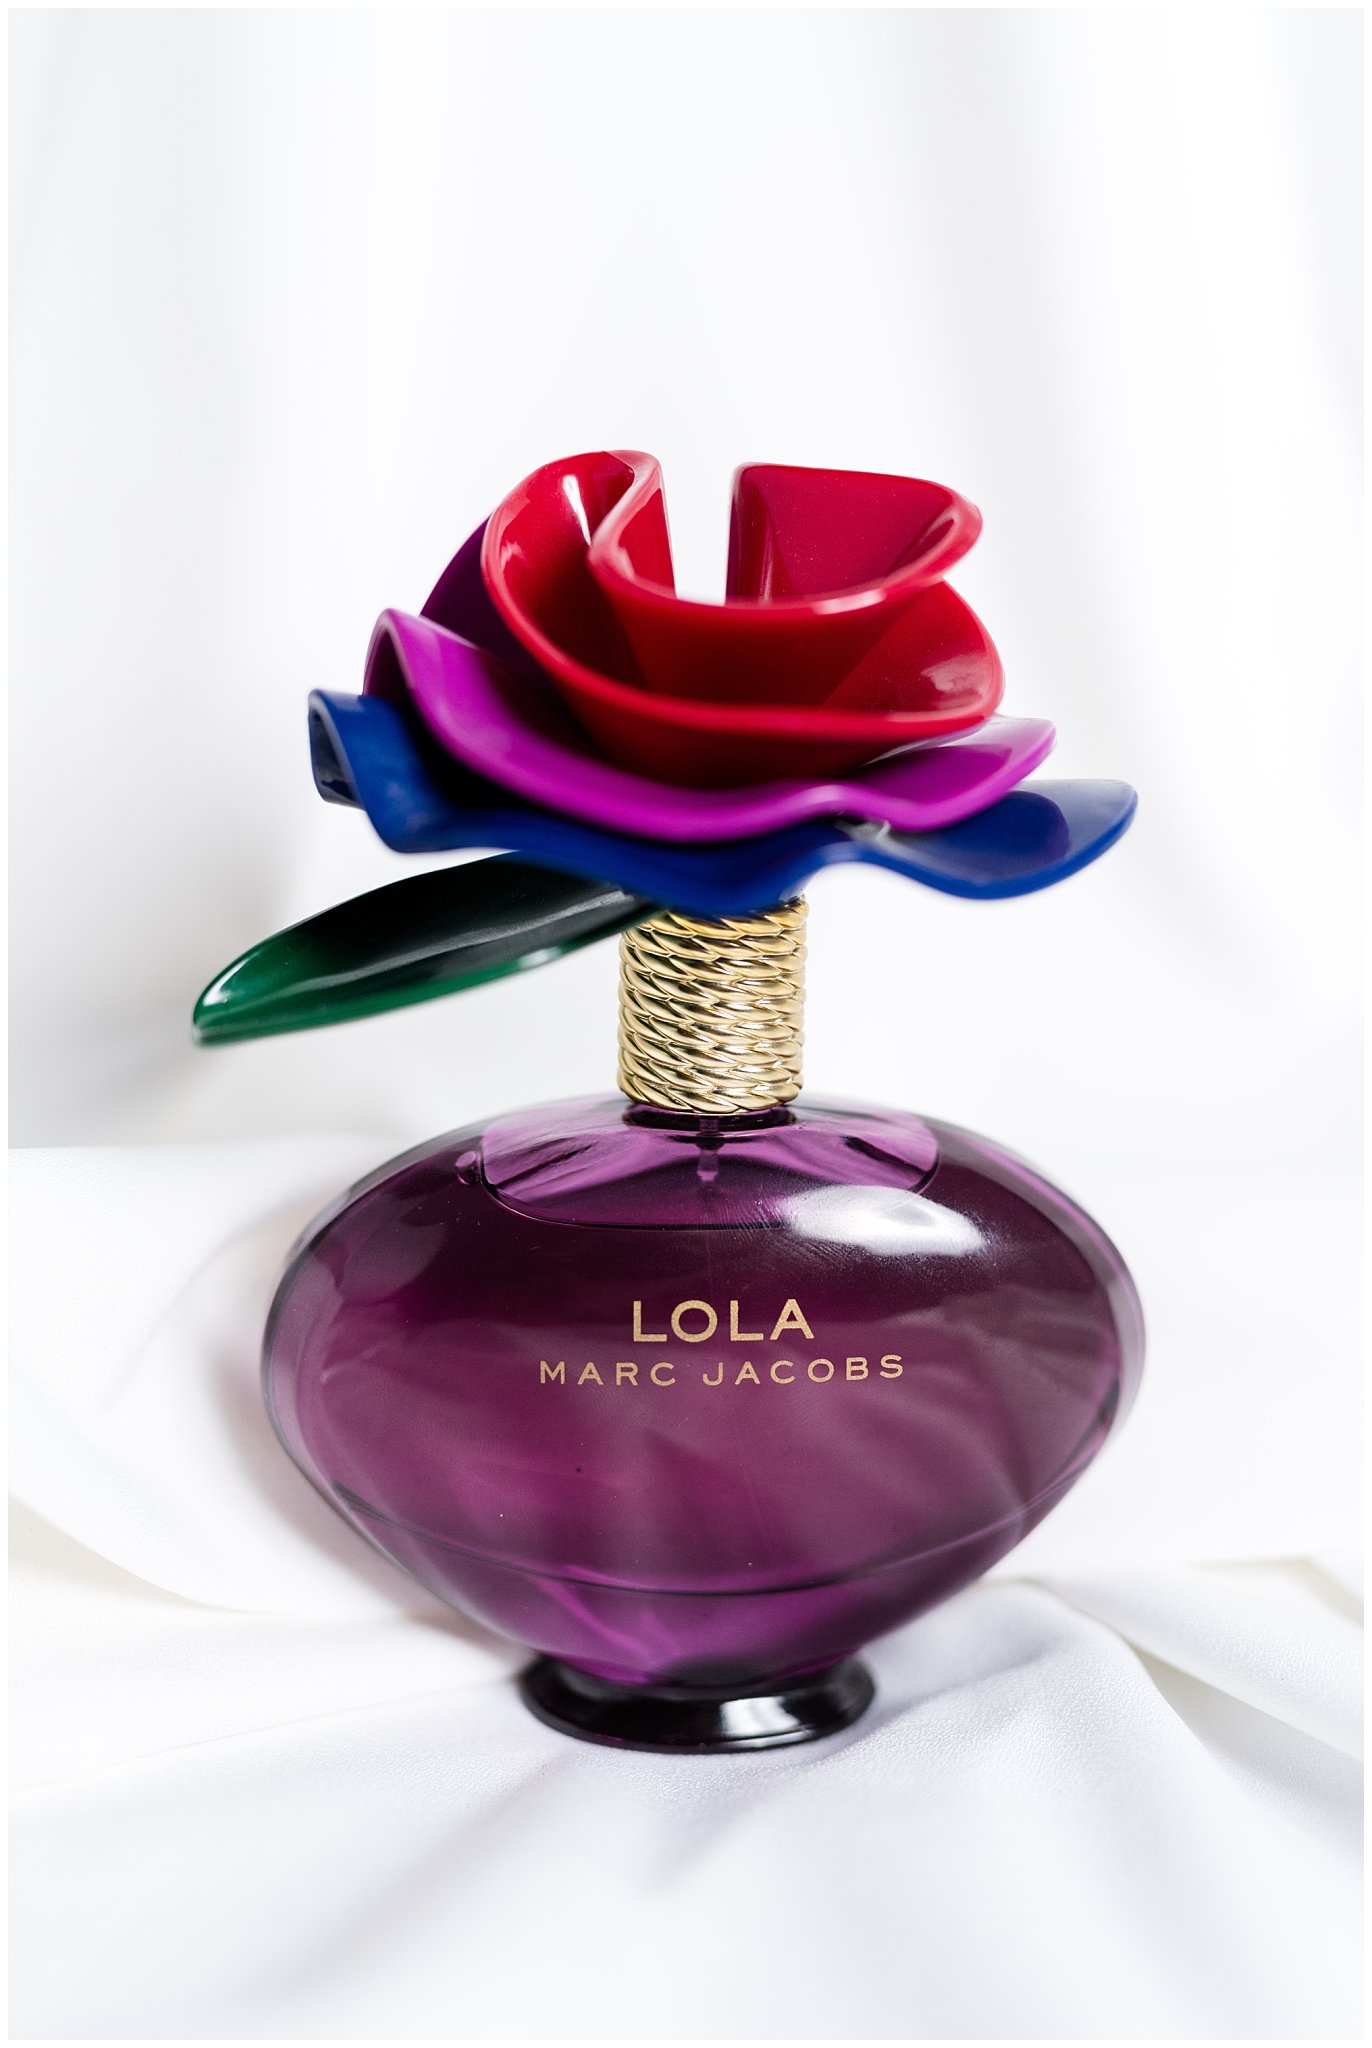 Marc Jacobs Lola wedding perfume detail on wedding dress | Talia Event Center